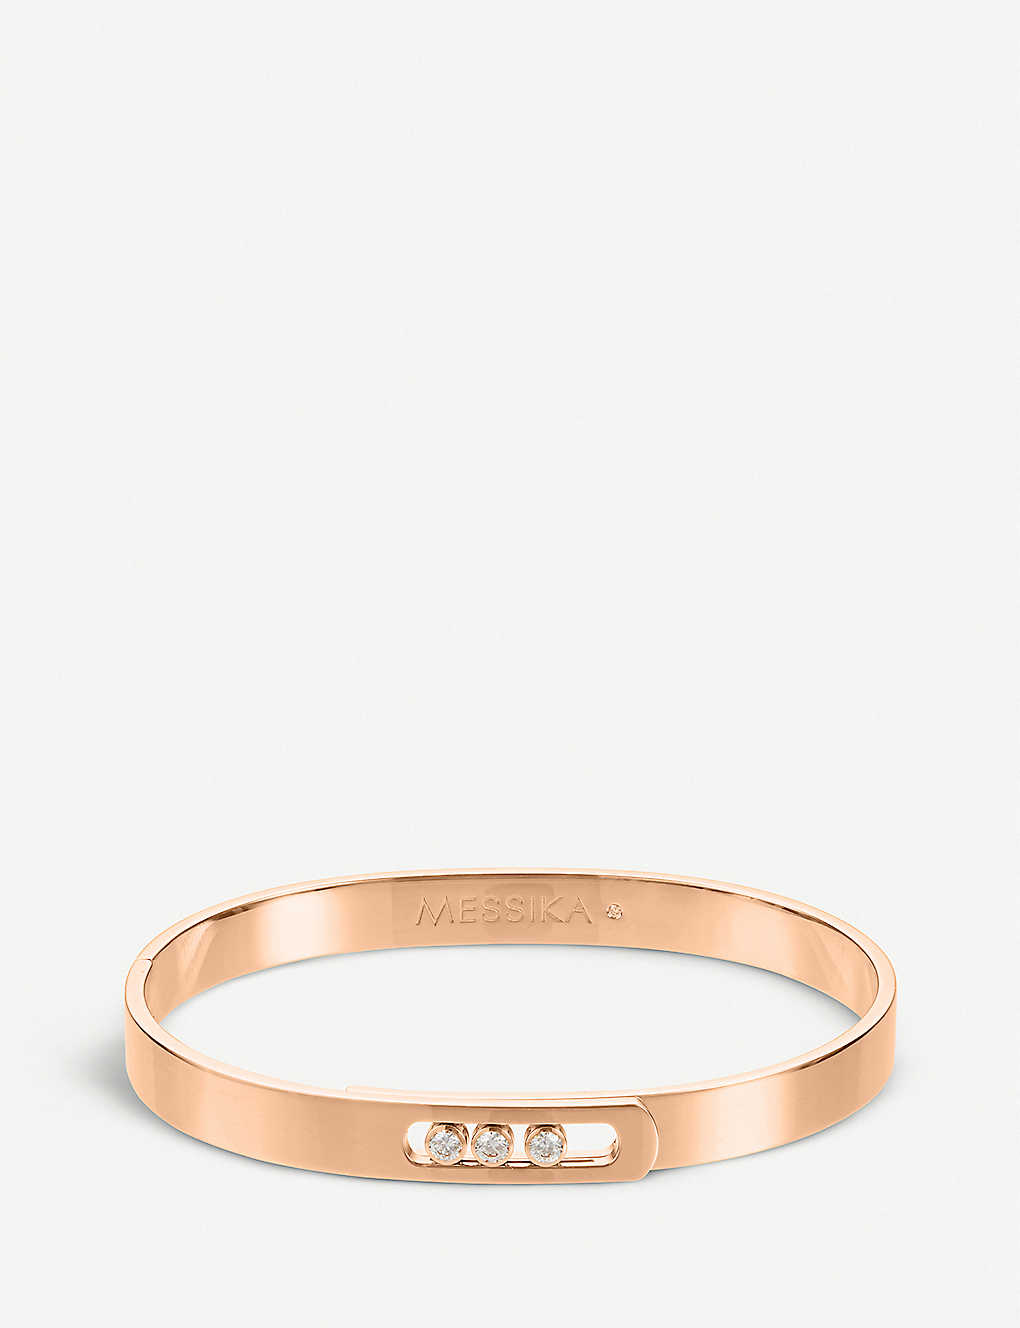 MESSIKA - Move Noa 18ct pink-gold and diamond bangle bracelet ...